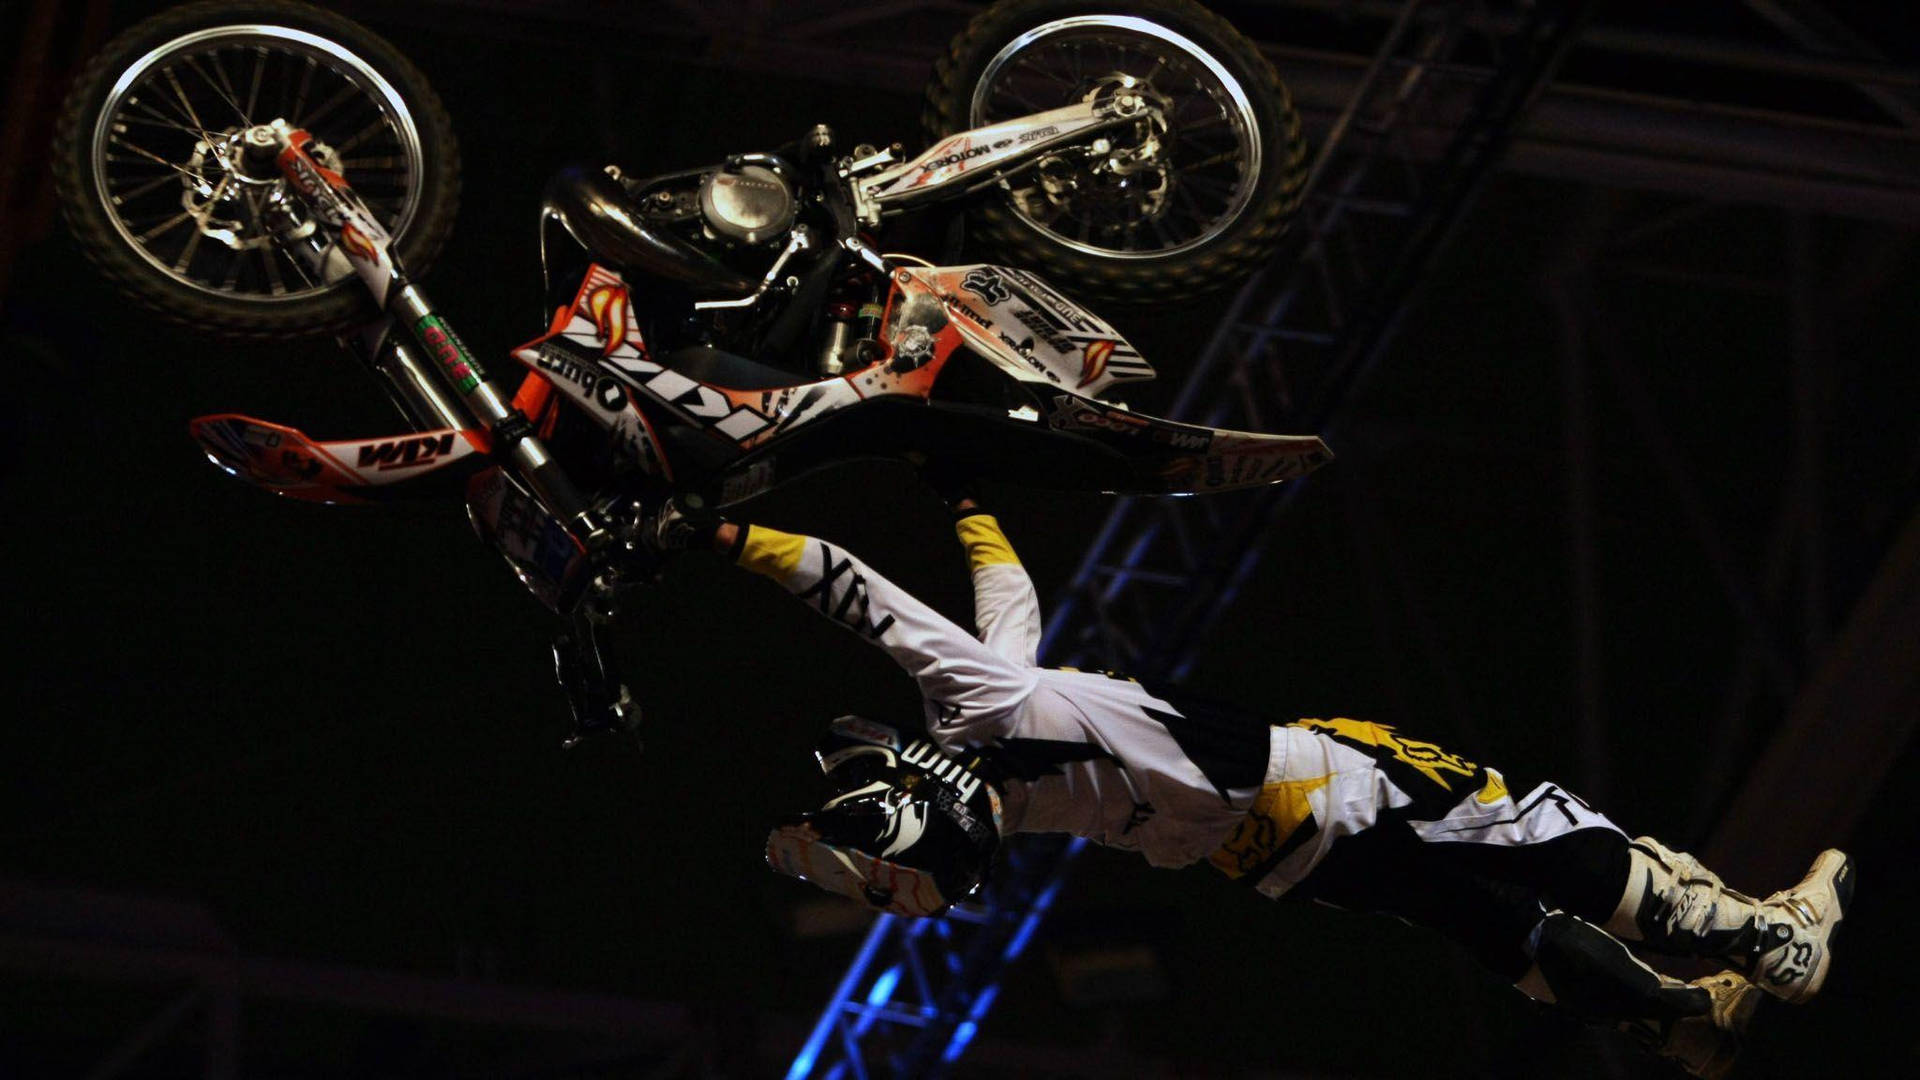 X Games Motocross Aerial Stunt